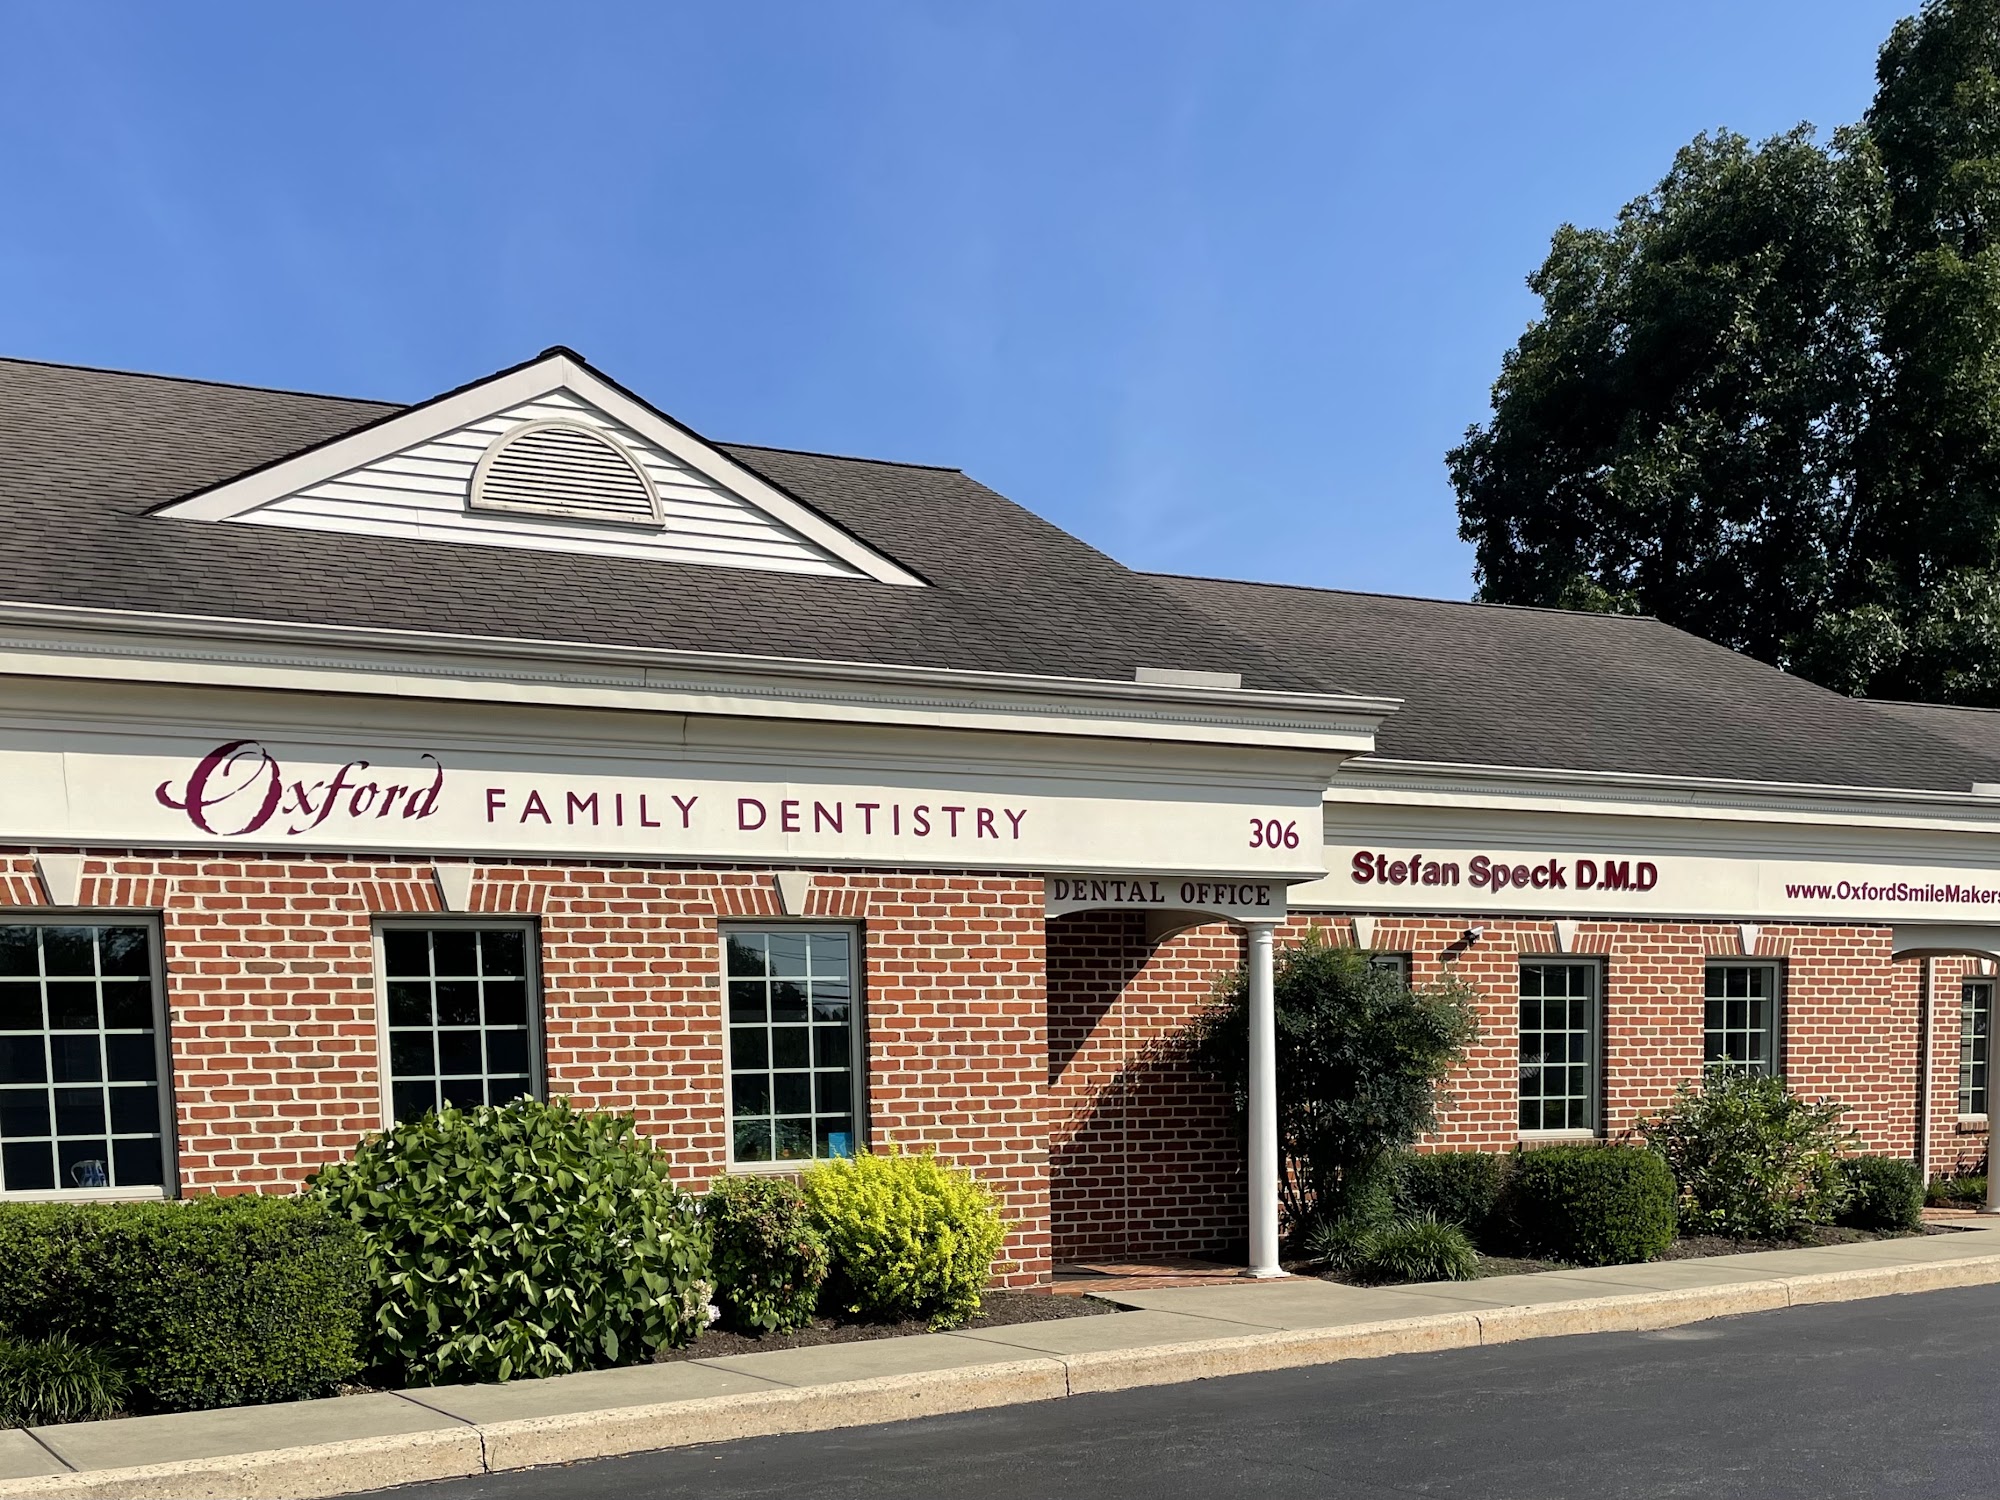 Oxford Family Dentistry: Stefan Speck DMD